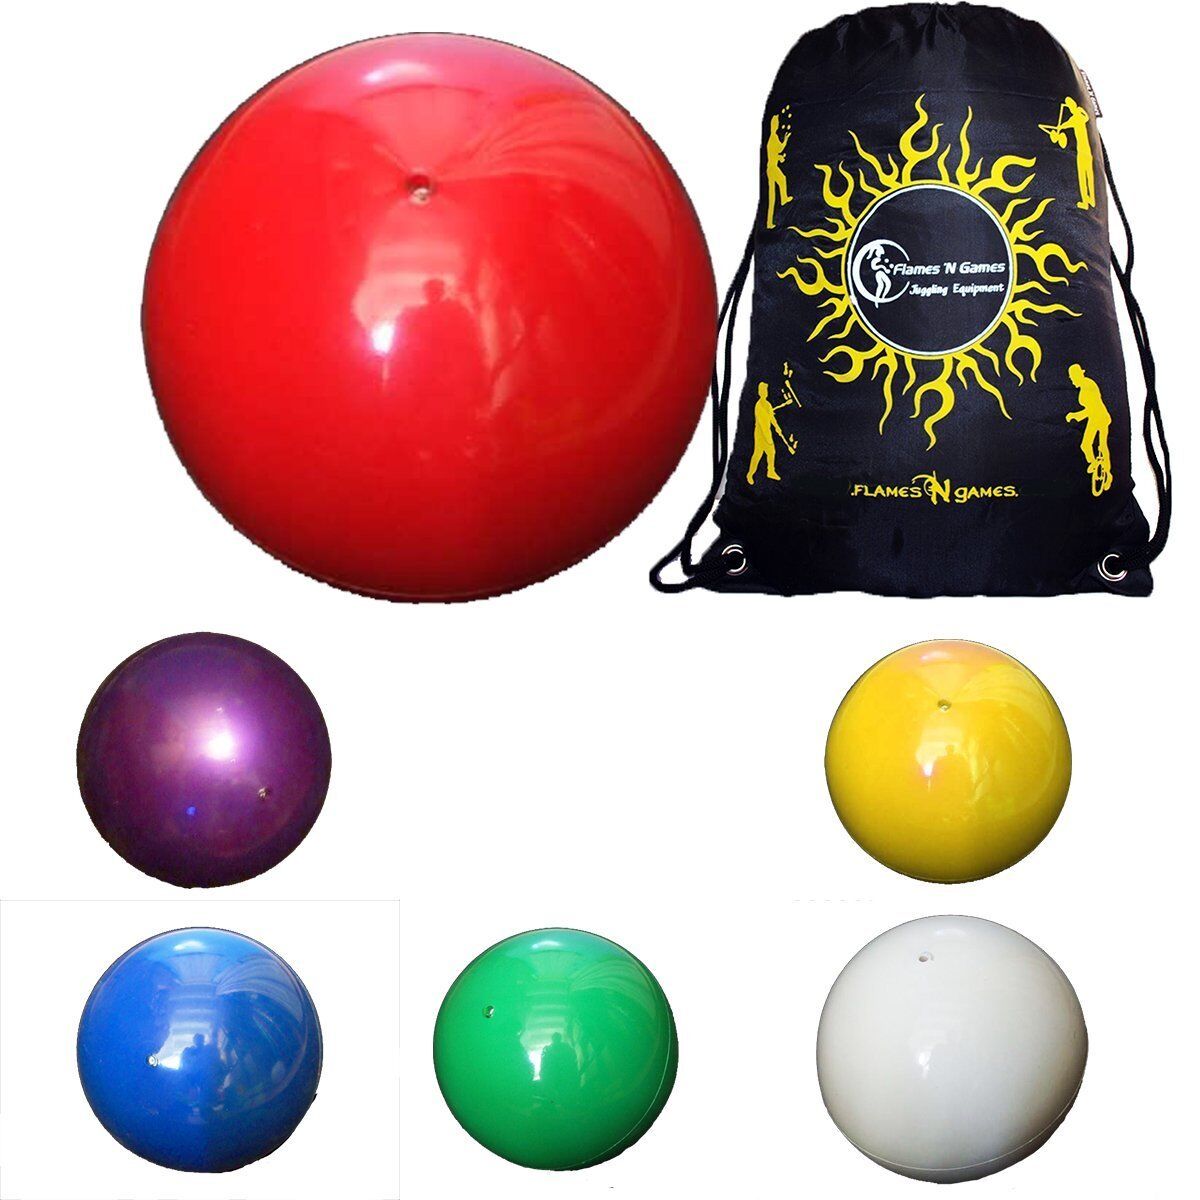 Rhythmic Sports 35% OFF Gynmastic 420g SPINNING Balls Max 71% OFF Ball Bag LARGE + -